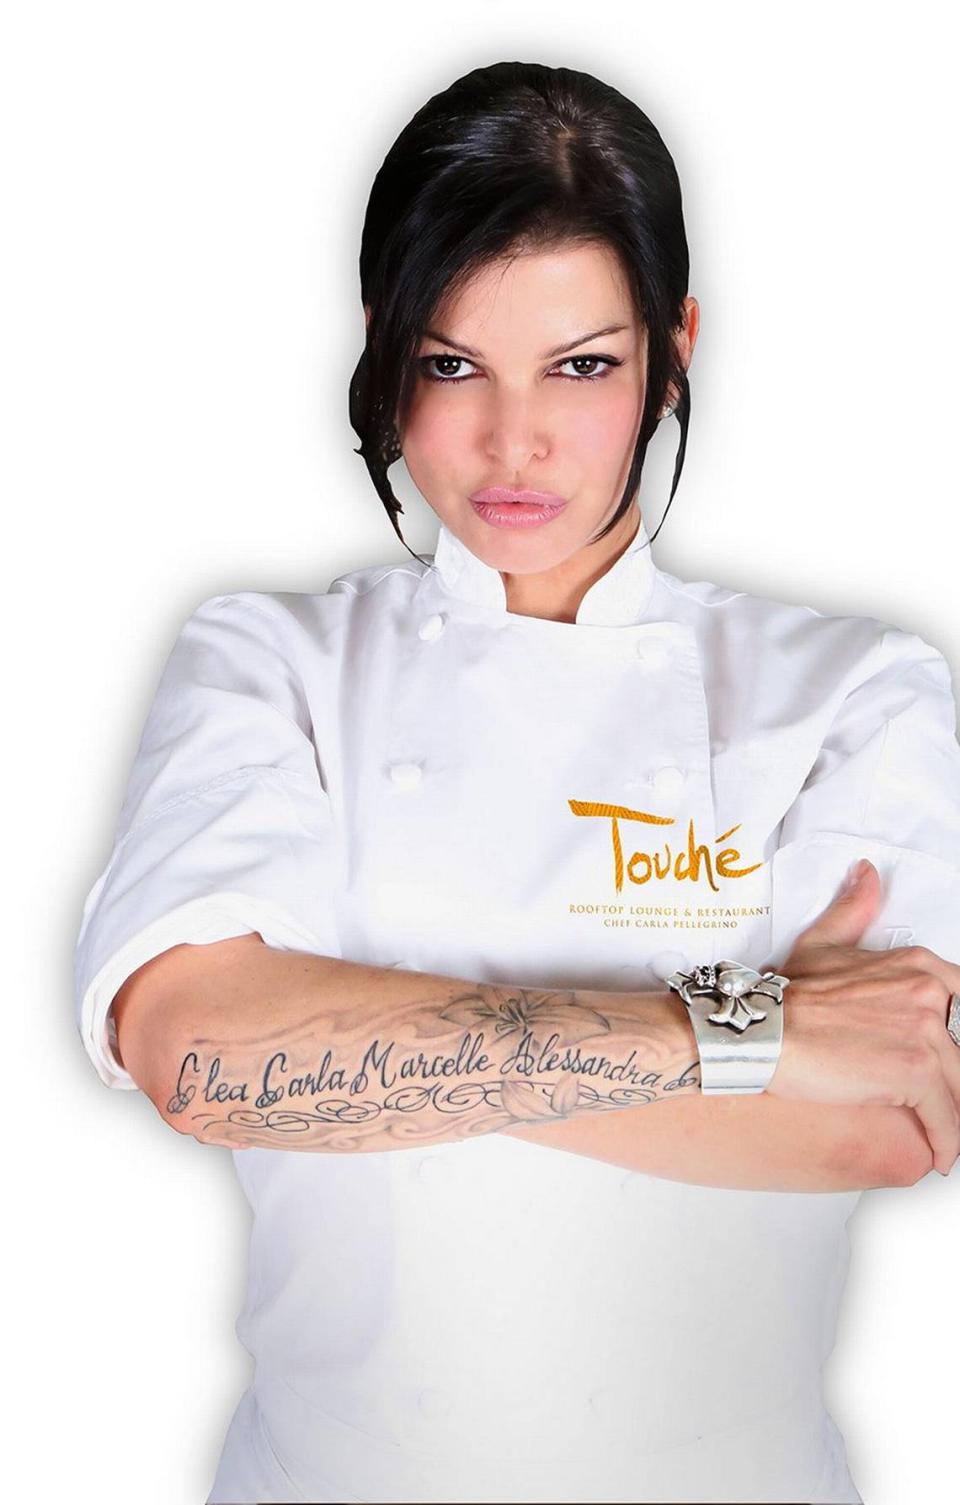 Chef Carla Pellegrino in her days at Touché Restaurant & Lounge in Miami. Miami Herald archives